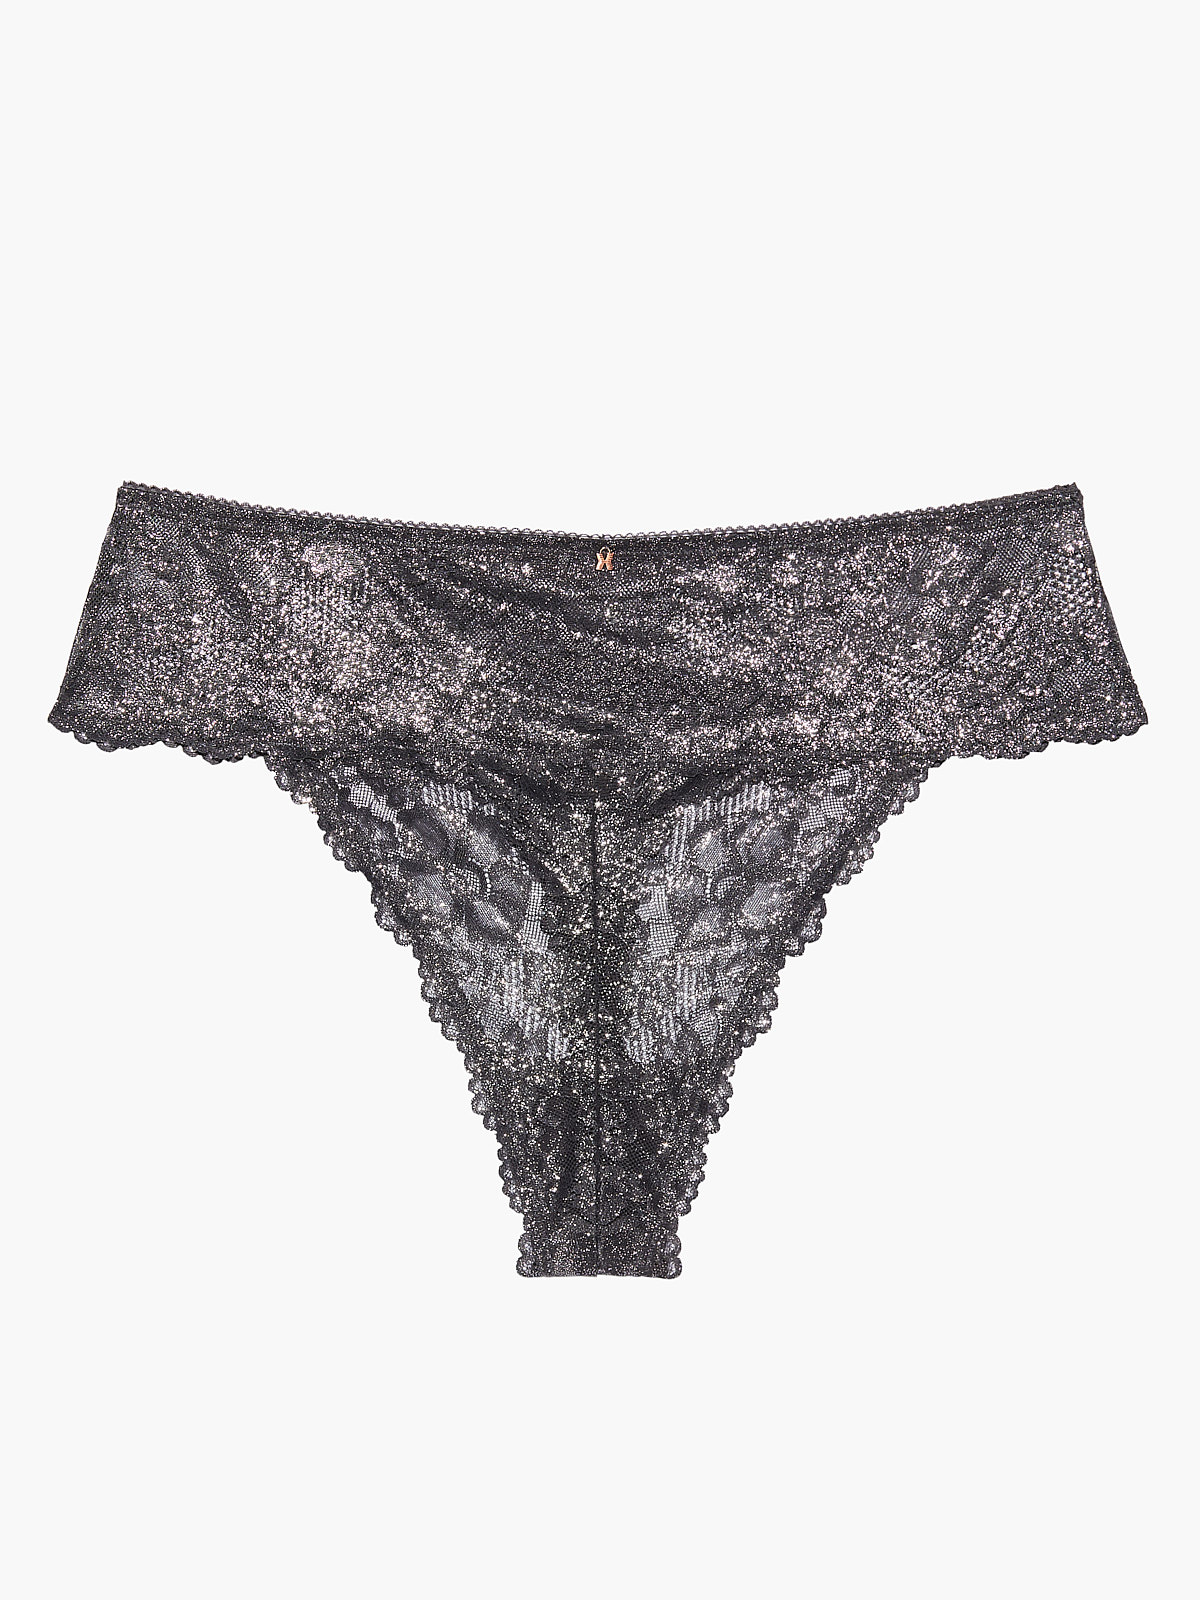 Victoria's Secret High-waist Thong Panty Black Mesh Floral Rhinestone Lace  M NWT